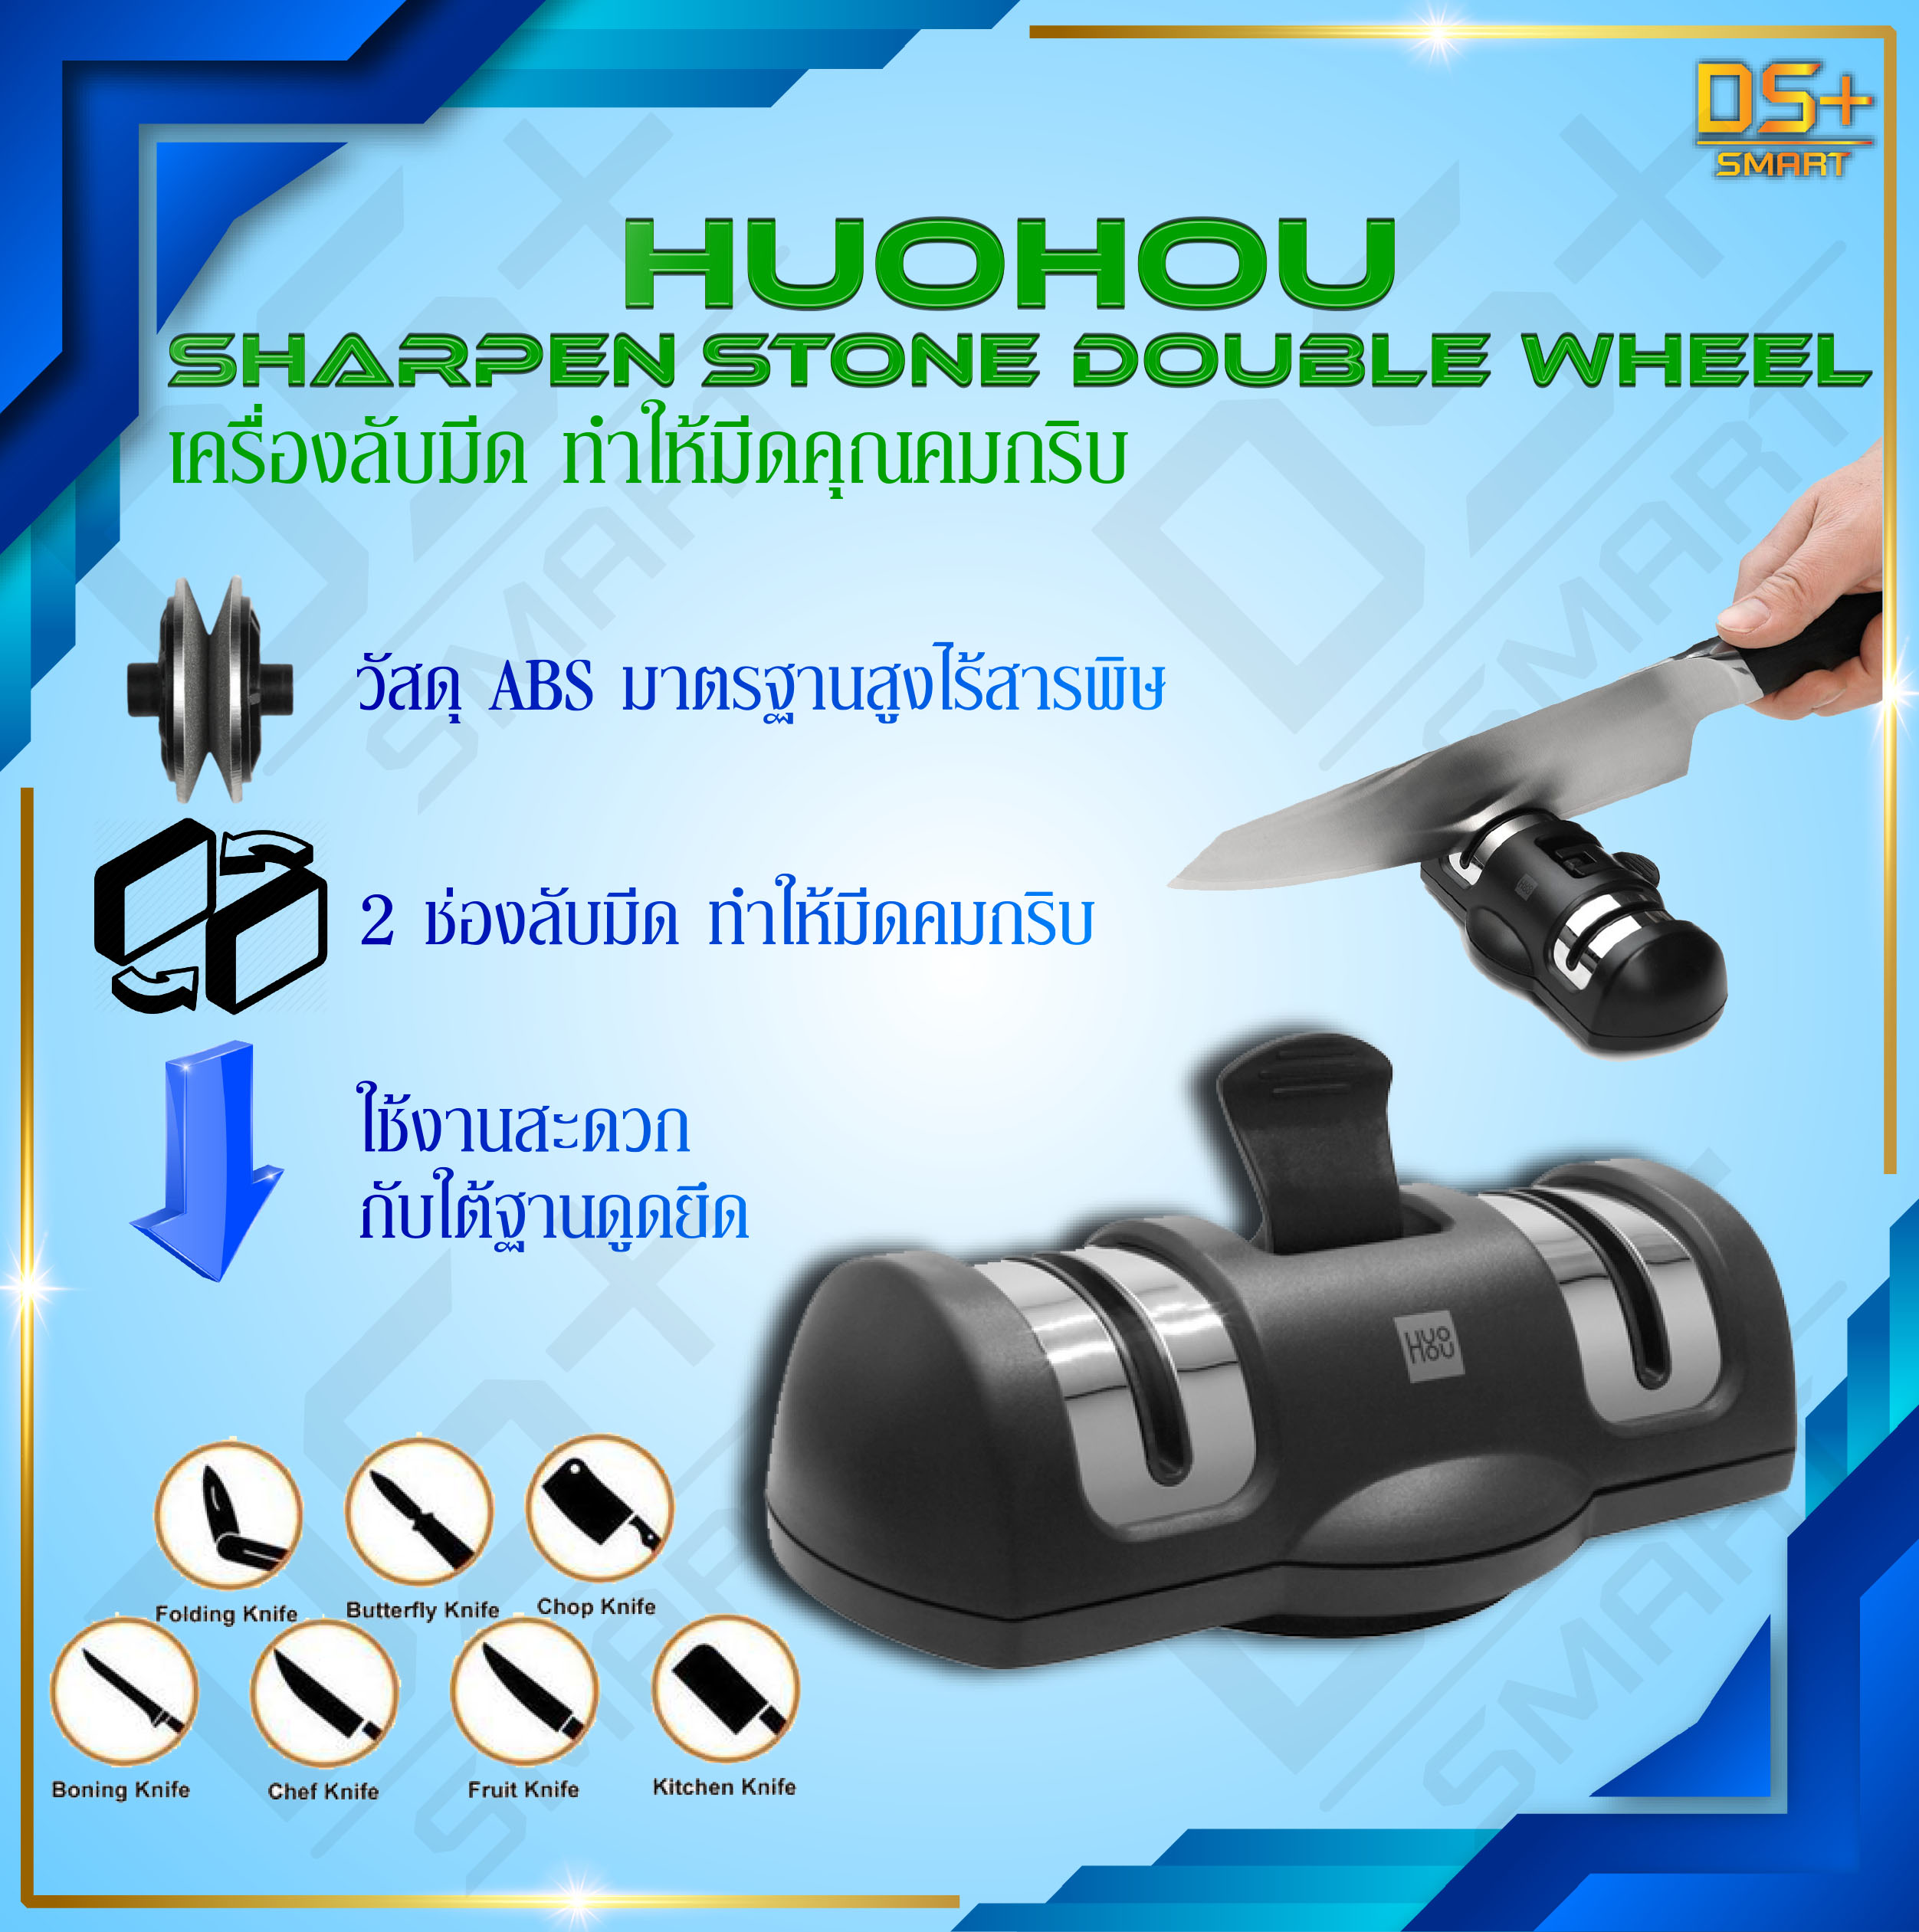 Mijia Youpin Huohou HU0045 Sharpen Stone Double Wheel เครื่องลับมีด เครื่องลับคม Whetstone Sharpeners Knife Sharpening Tool Grindstone Kitchen Tools เครื่องลับมีด สำหรับใช้ในครัว ทำความสะ